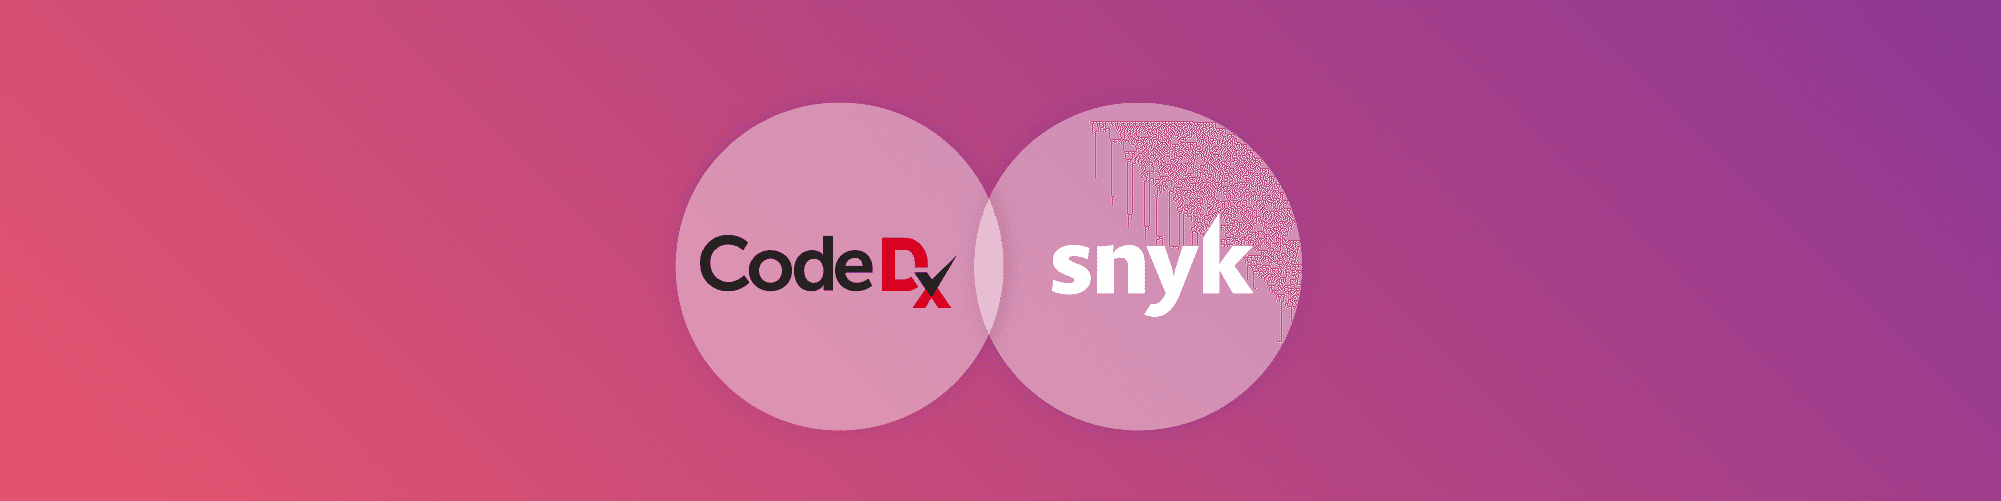 wordpress-sync/blog-banner-snyk-codedx